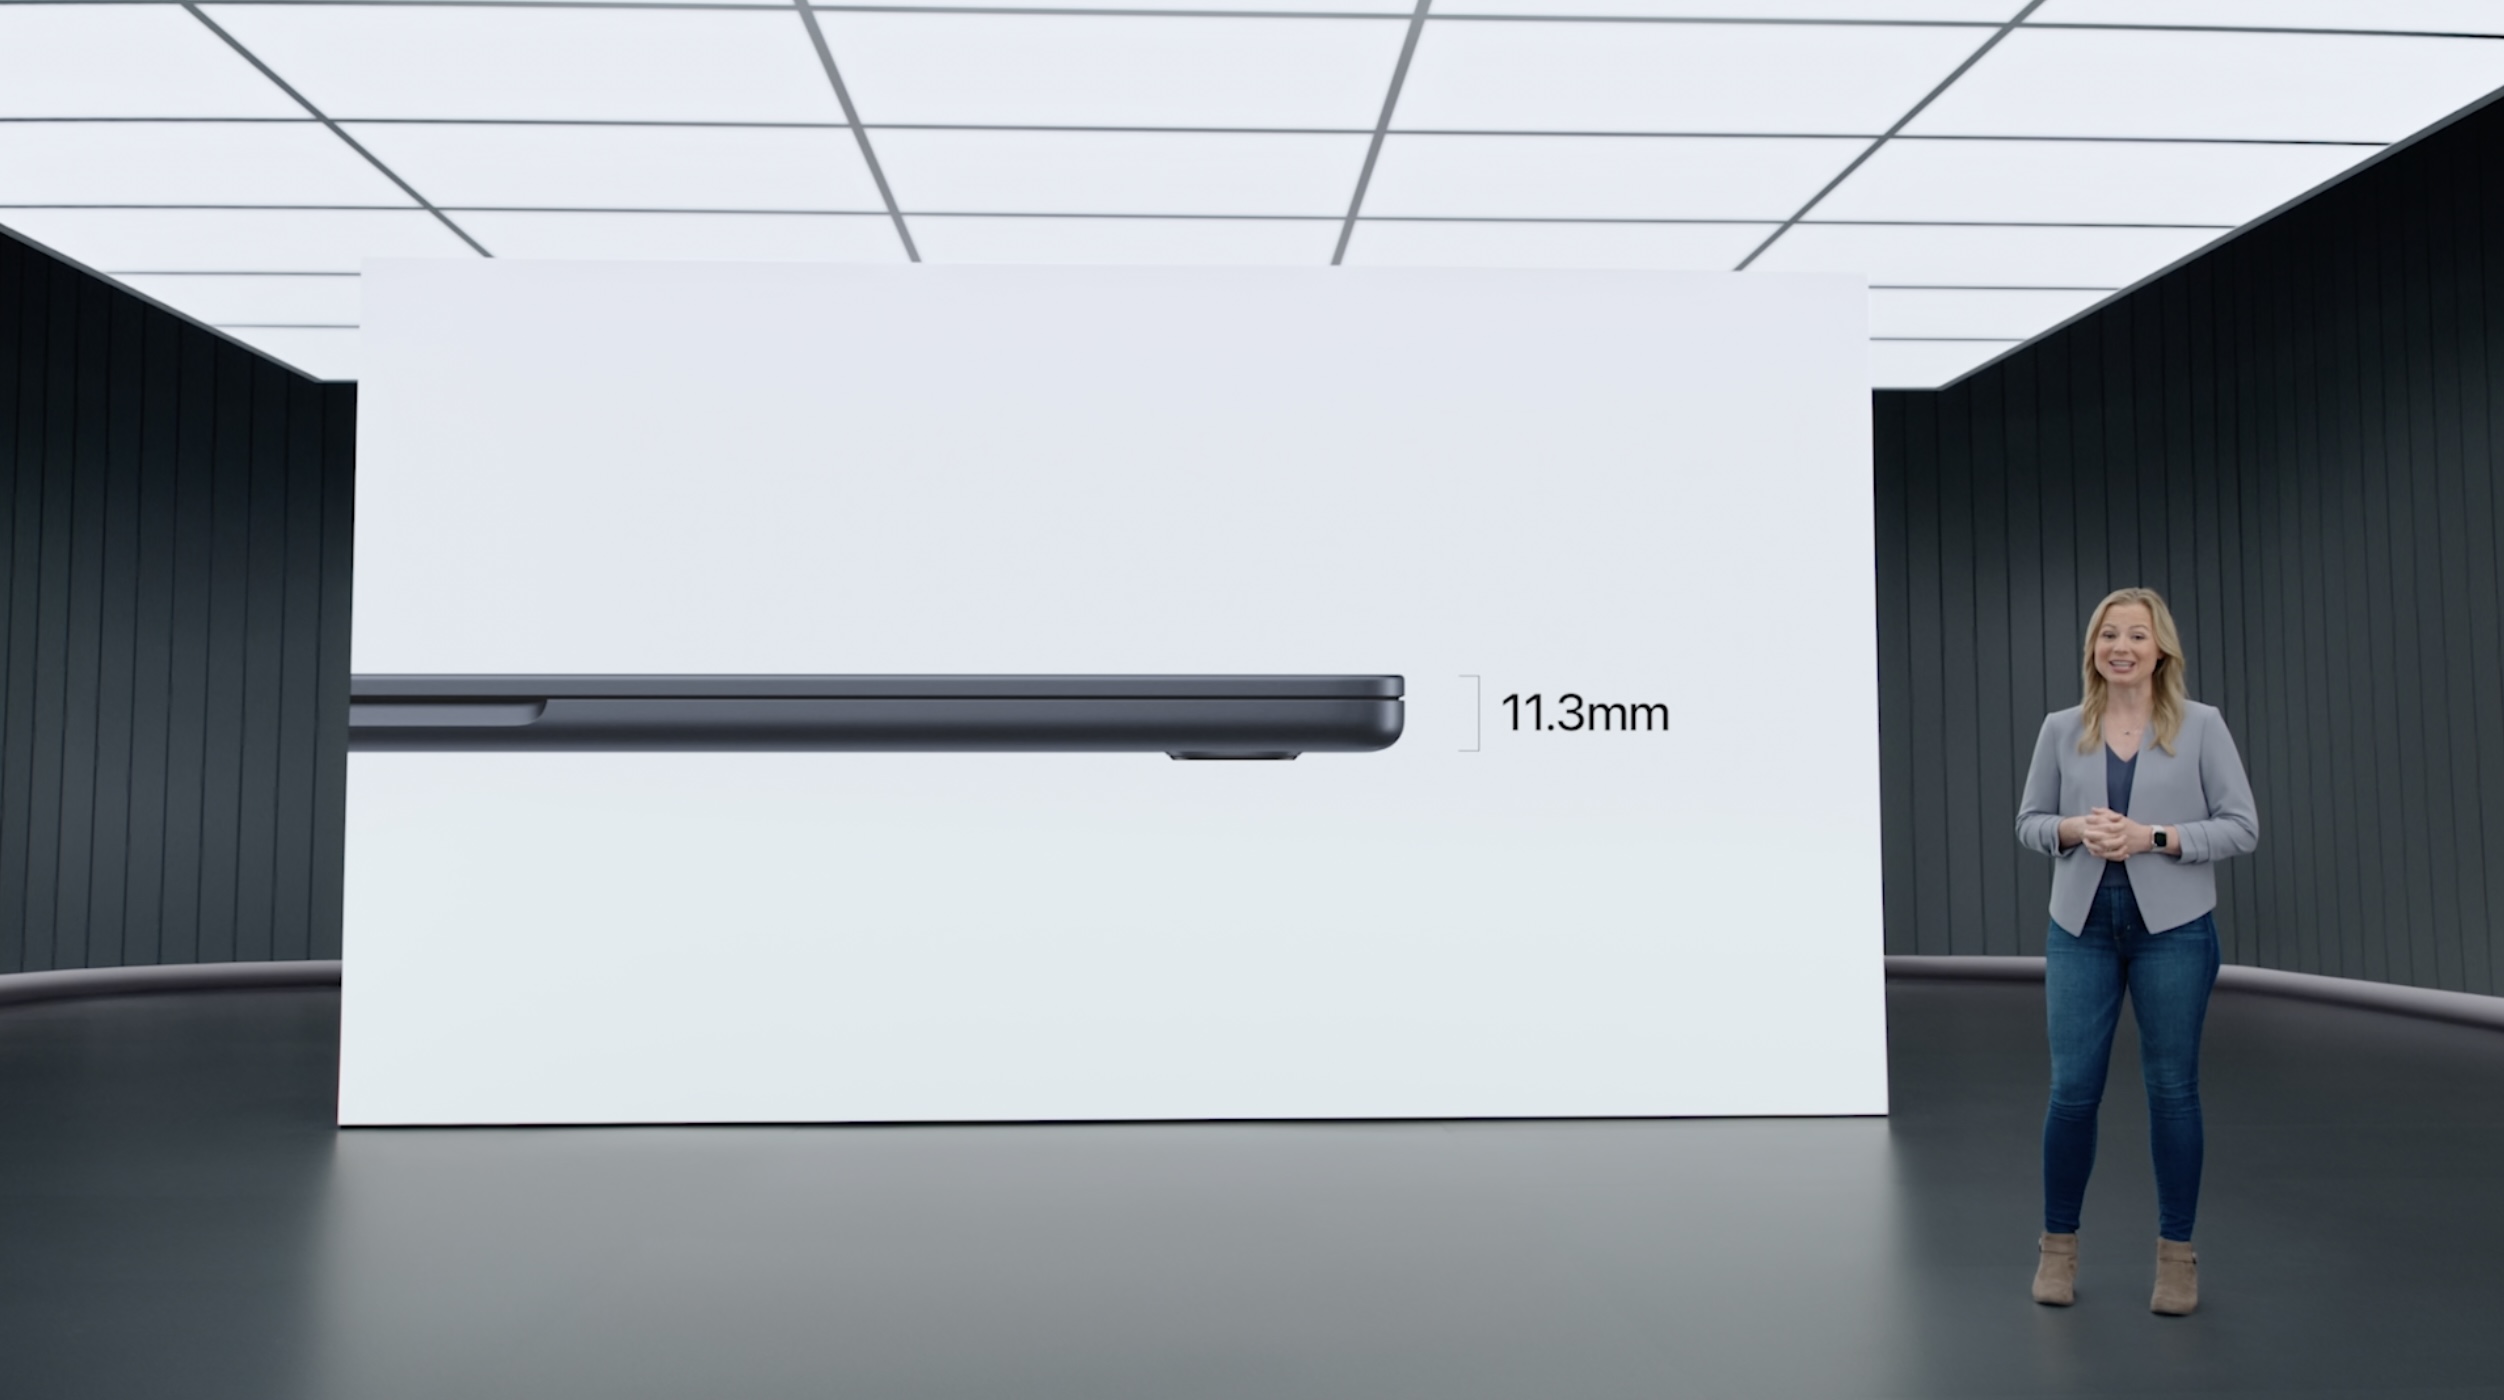 MacBook Air thickness